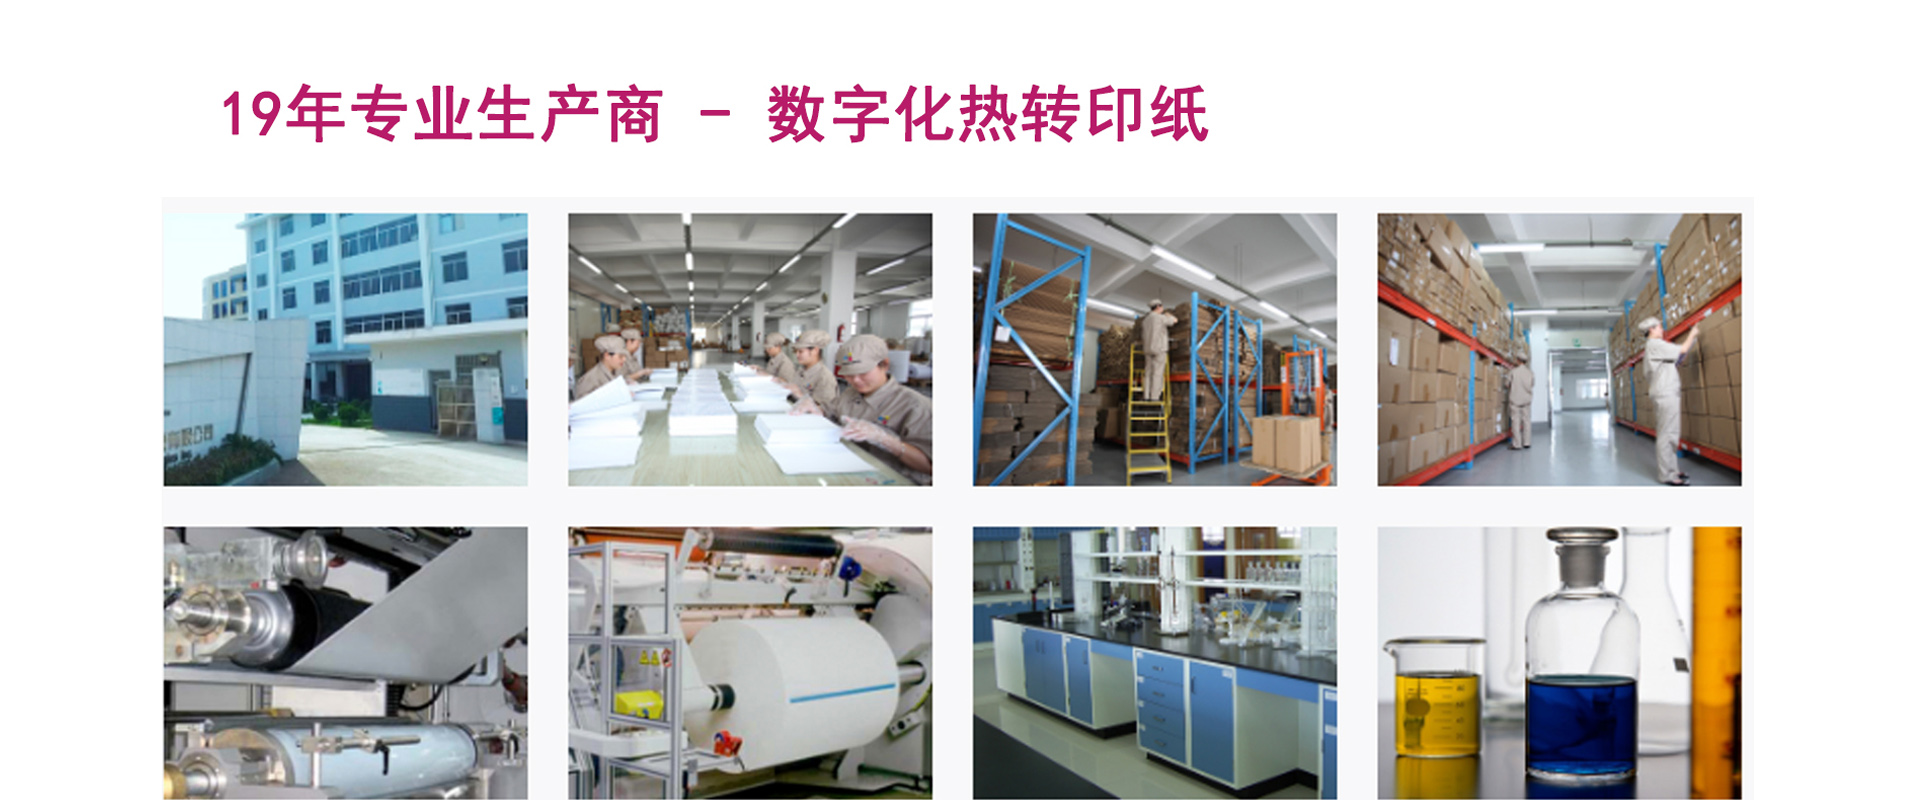 HTW-300R and heattransfervinyl cameo OEM ODM 福州茜素 主图 2023 专业生产商